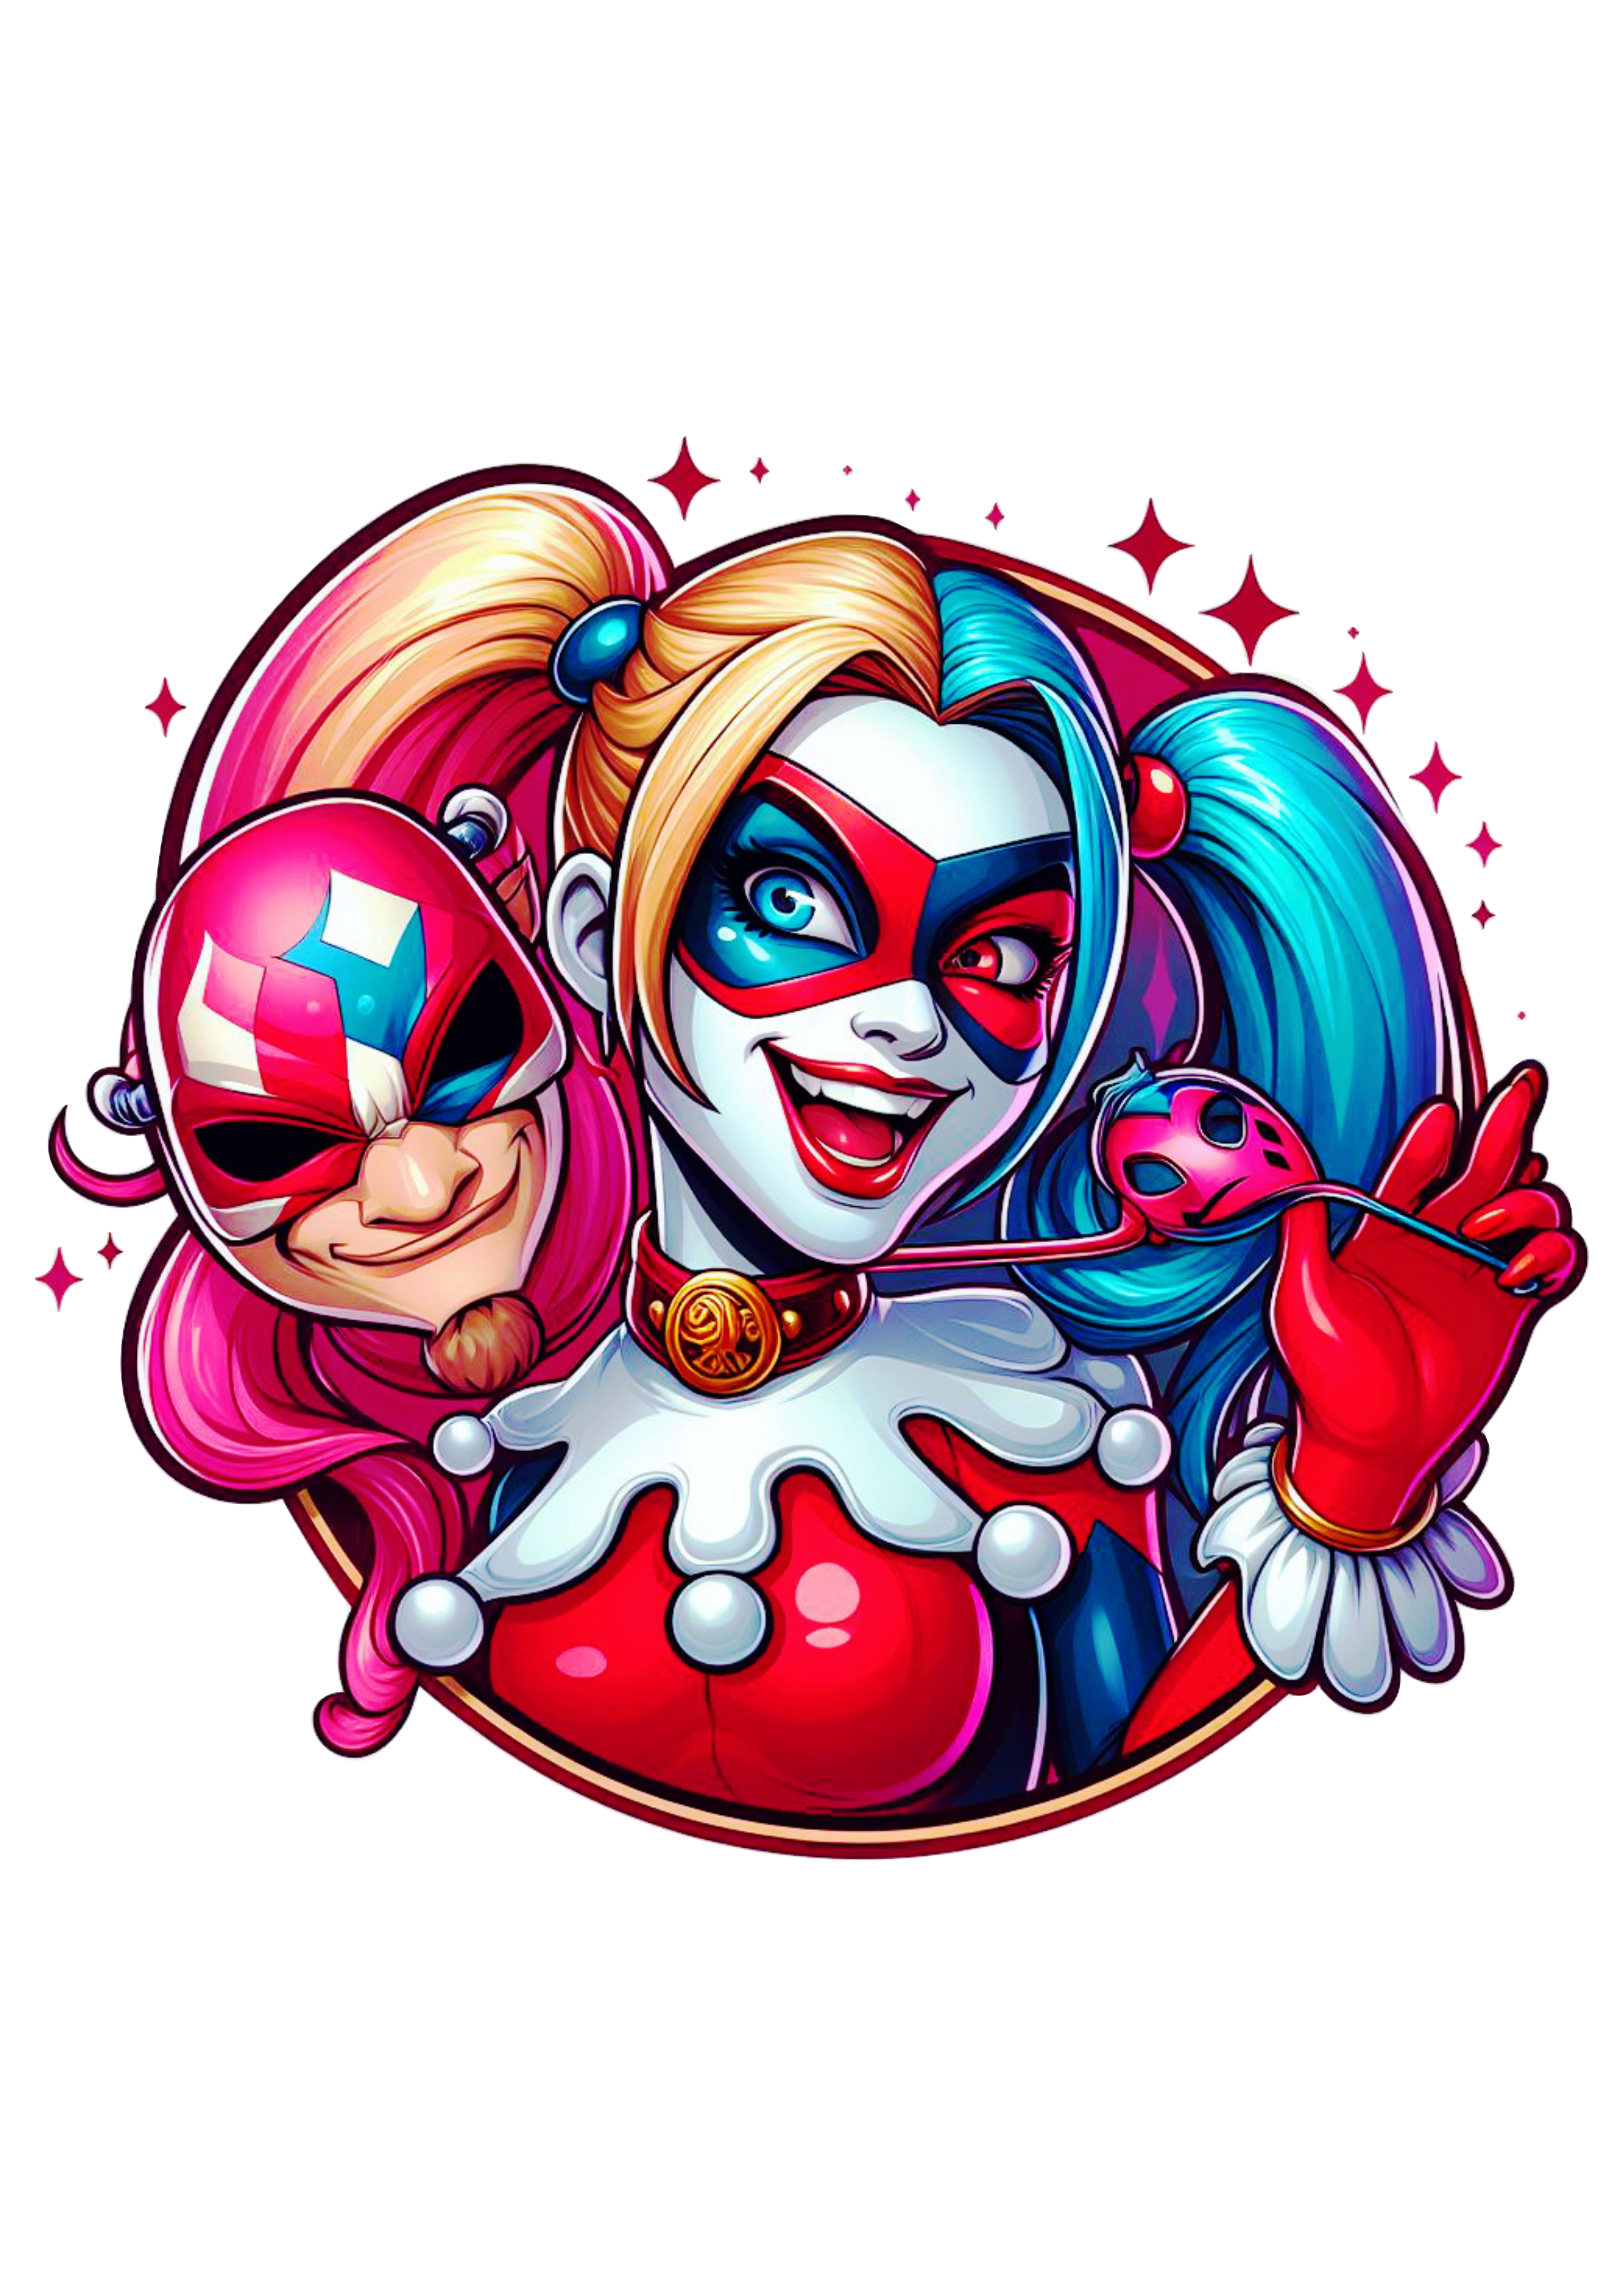 Arlequina Harley Quinn fantasia de carnaval png imagem